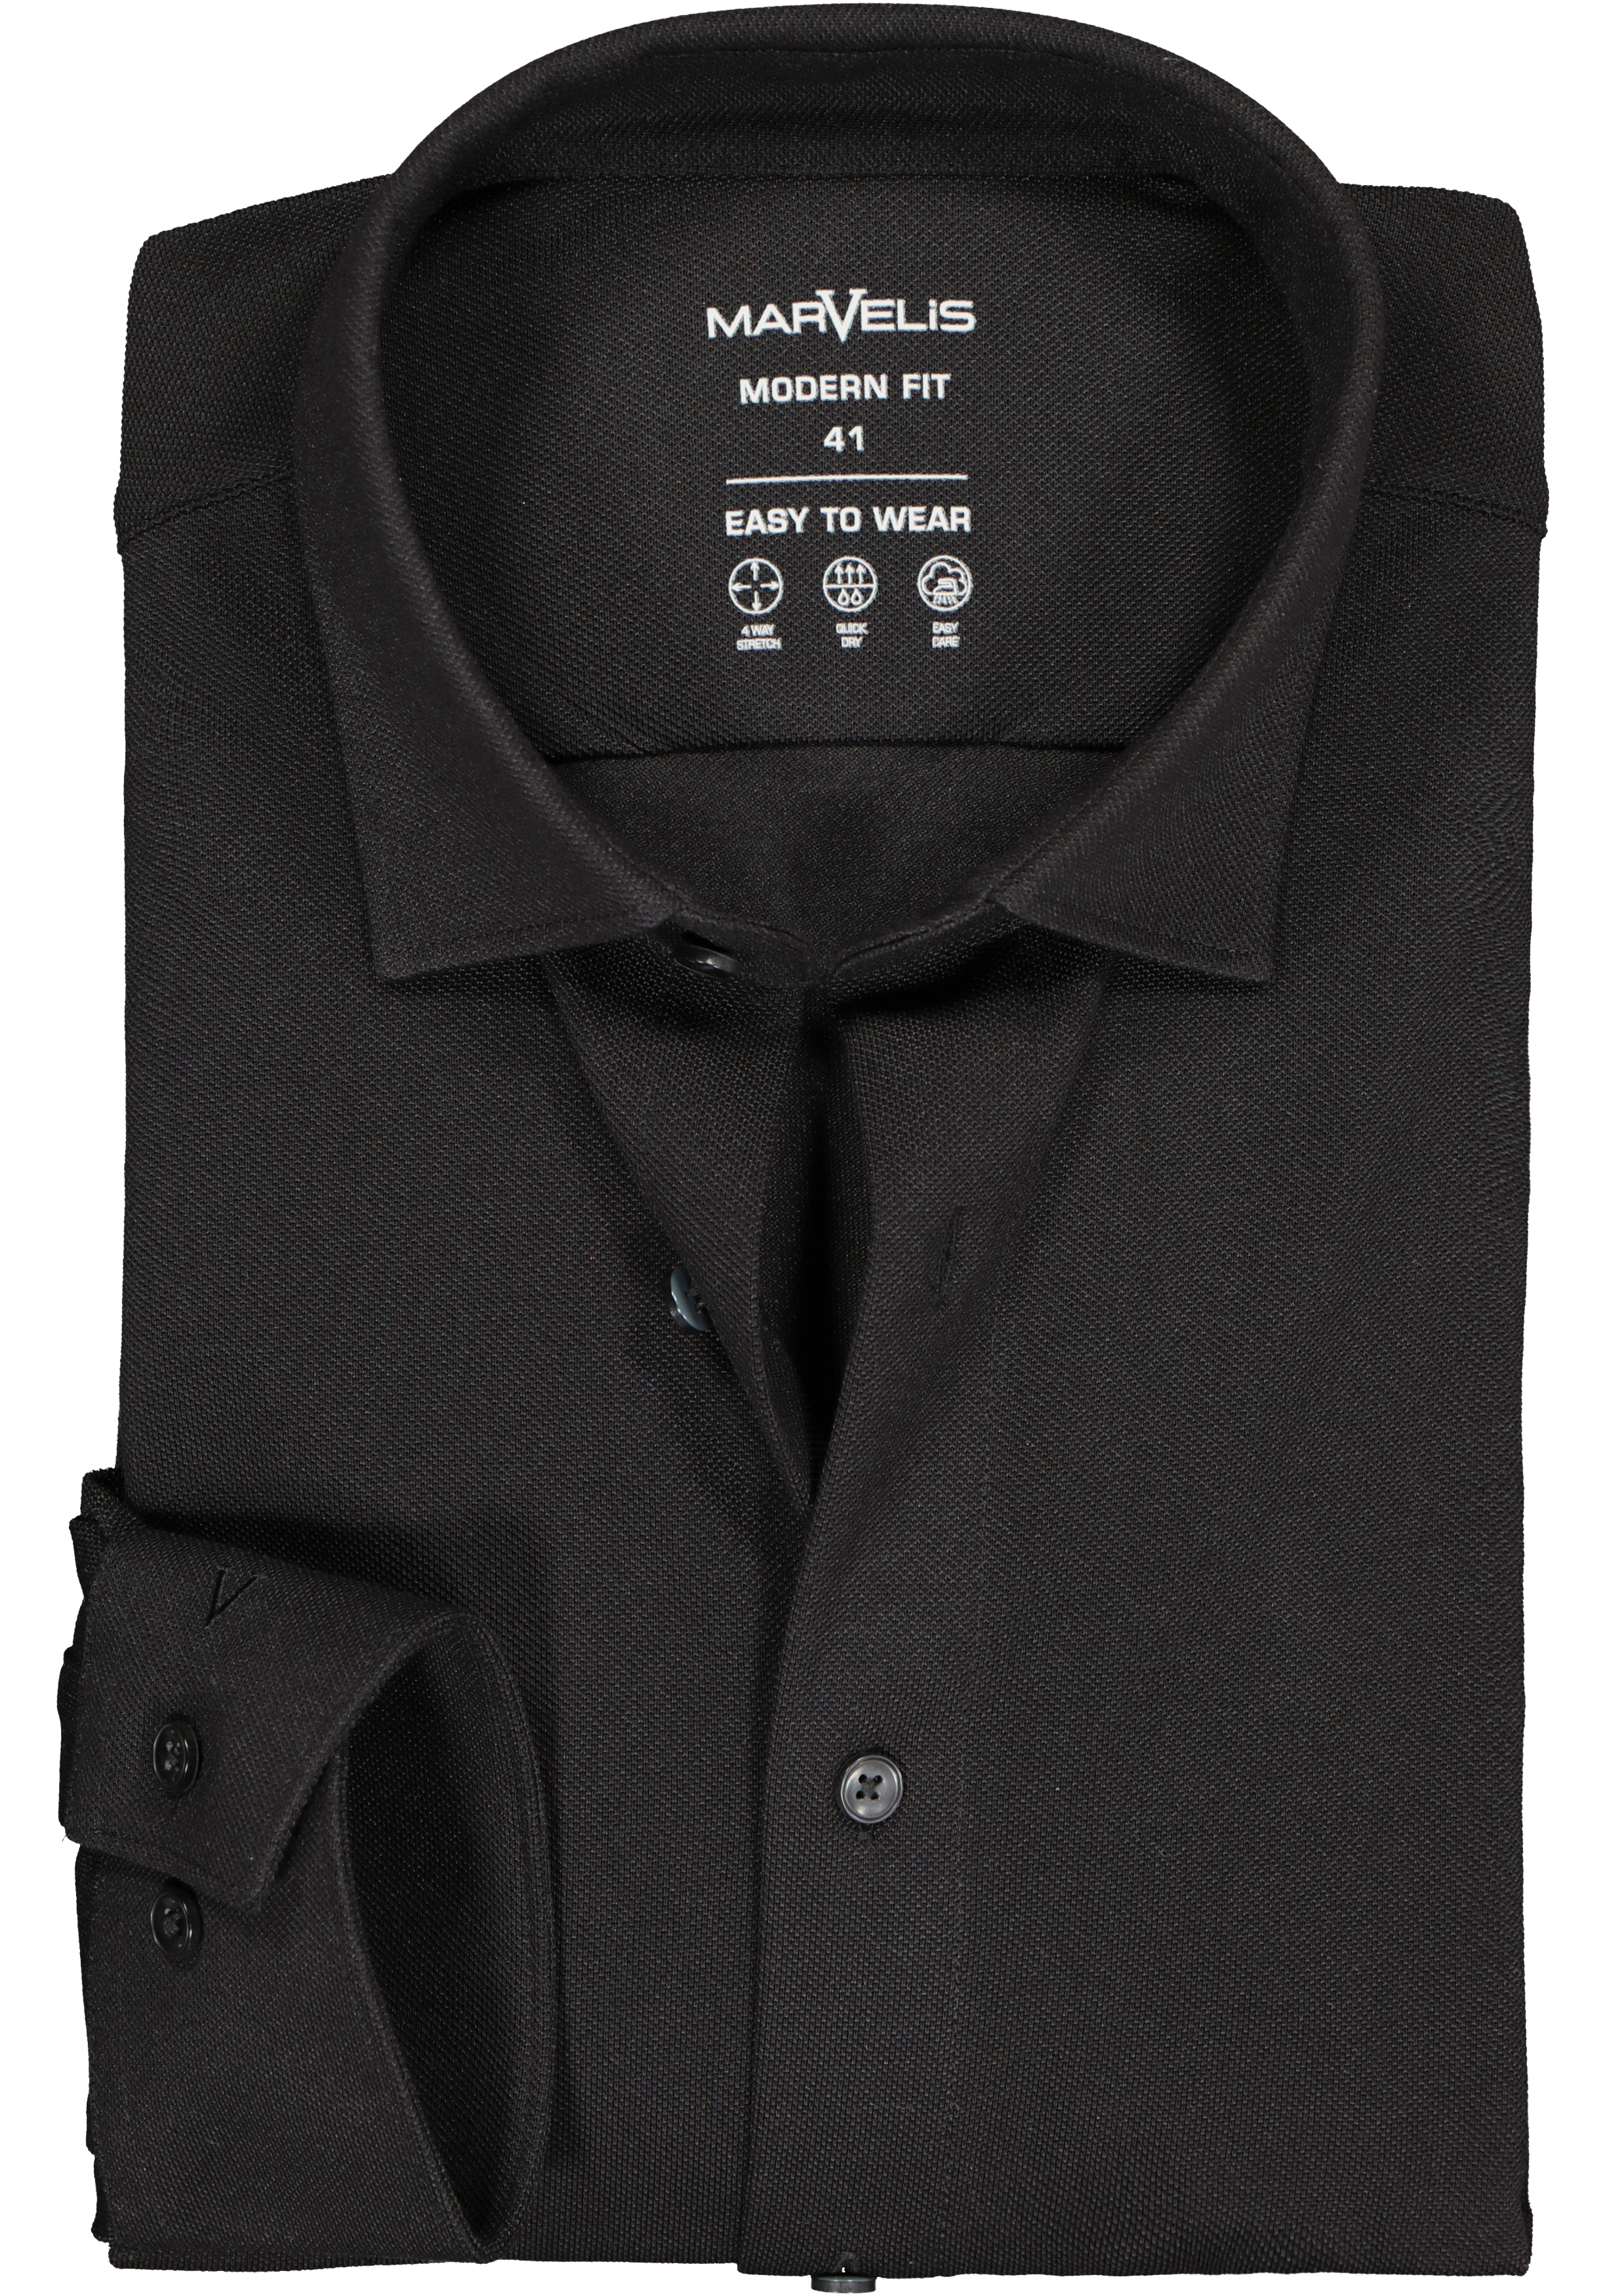 MARVELIS jersey modern fit overhemd, zwart tricot